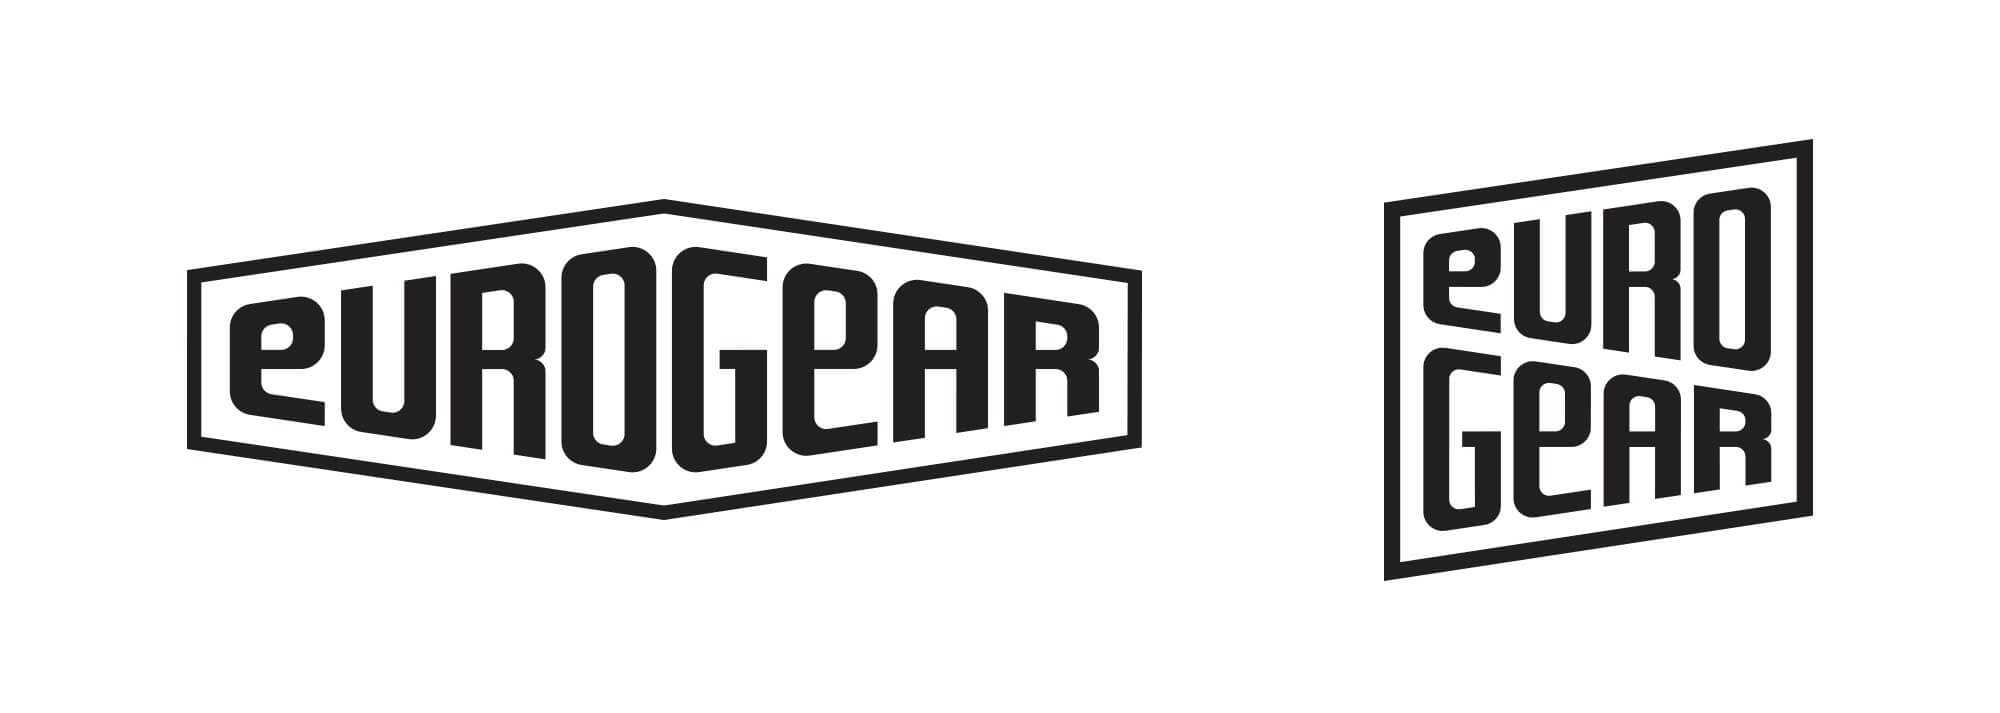 Eurogear Logo Design